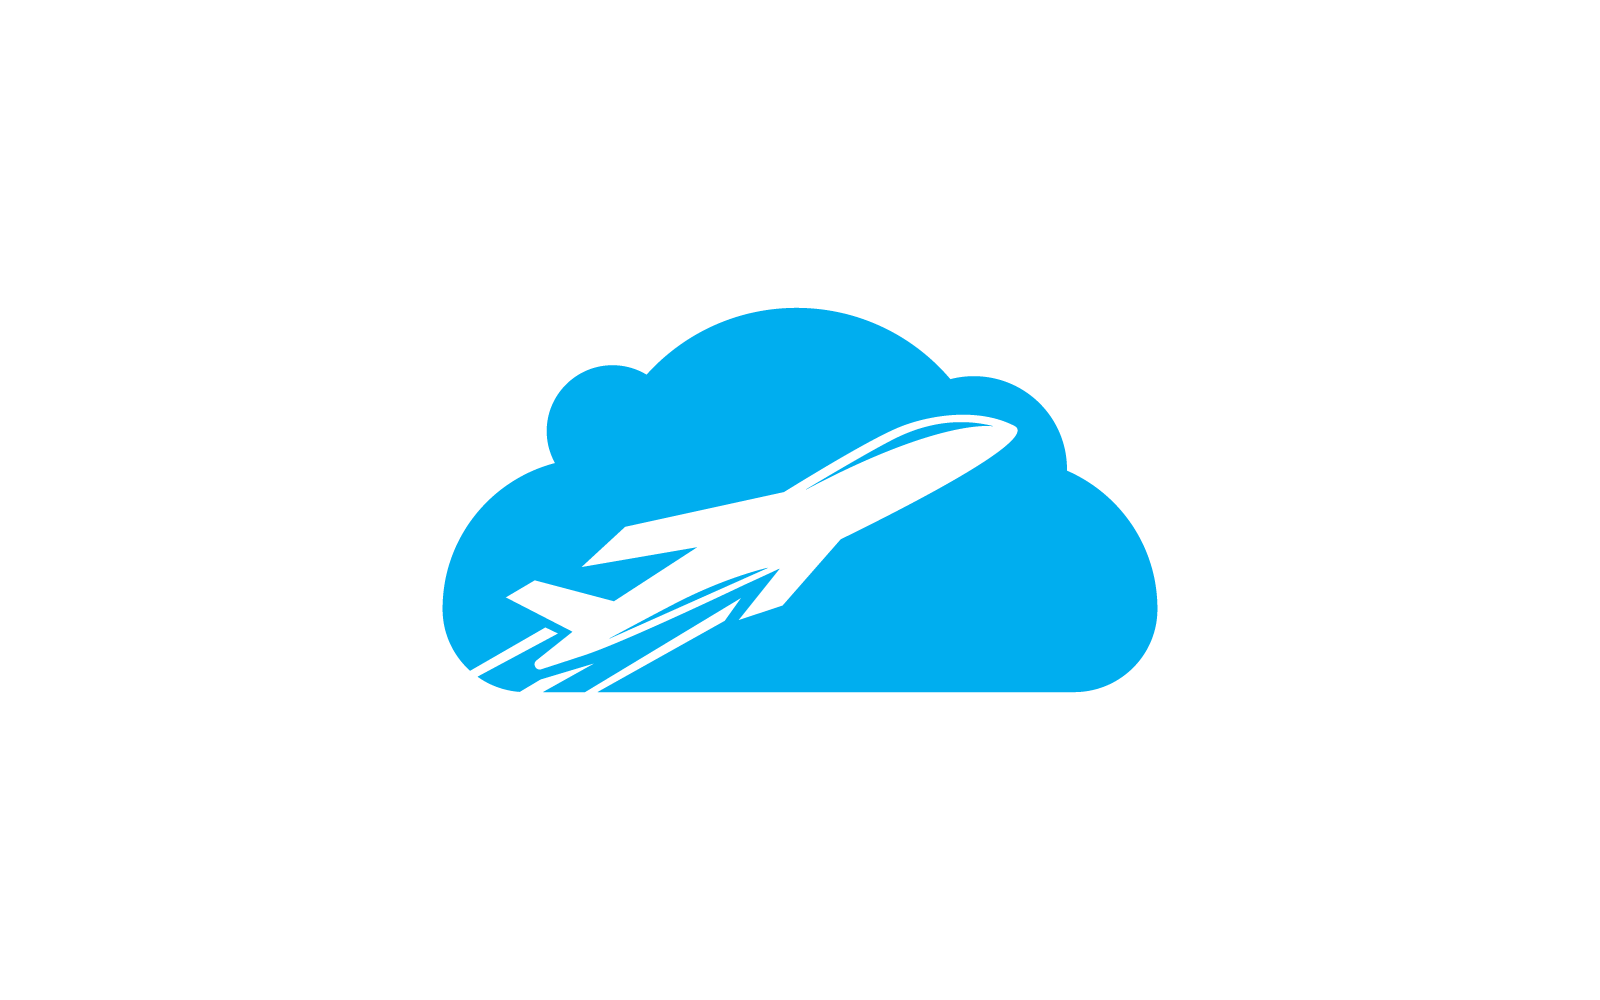 Air Plane illustration logo vector icon template